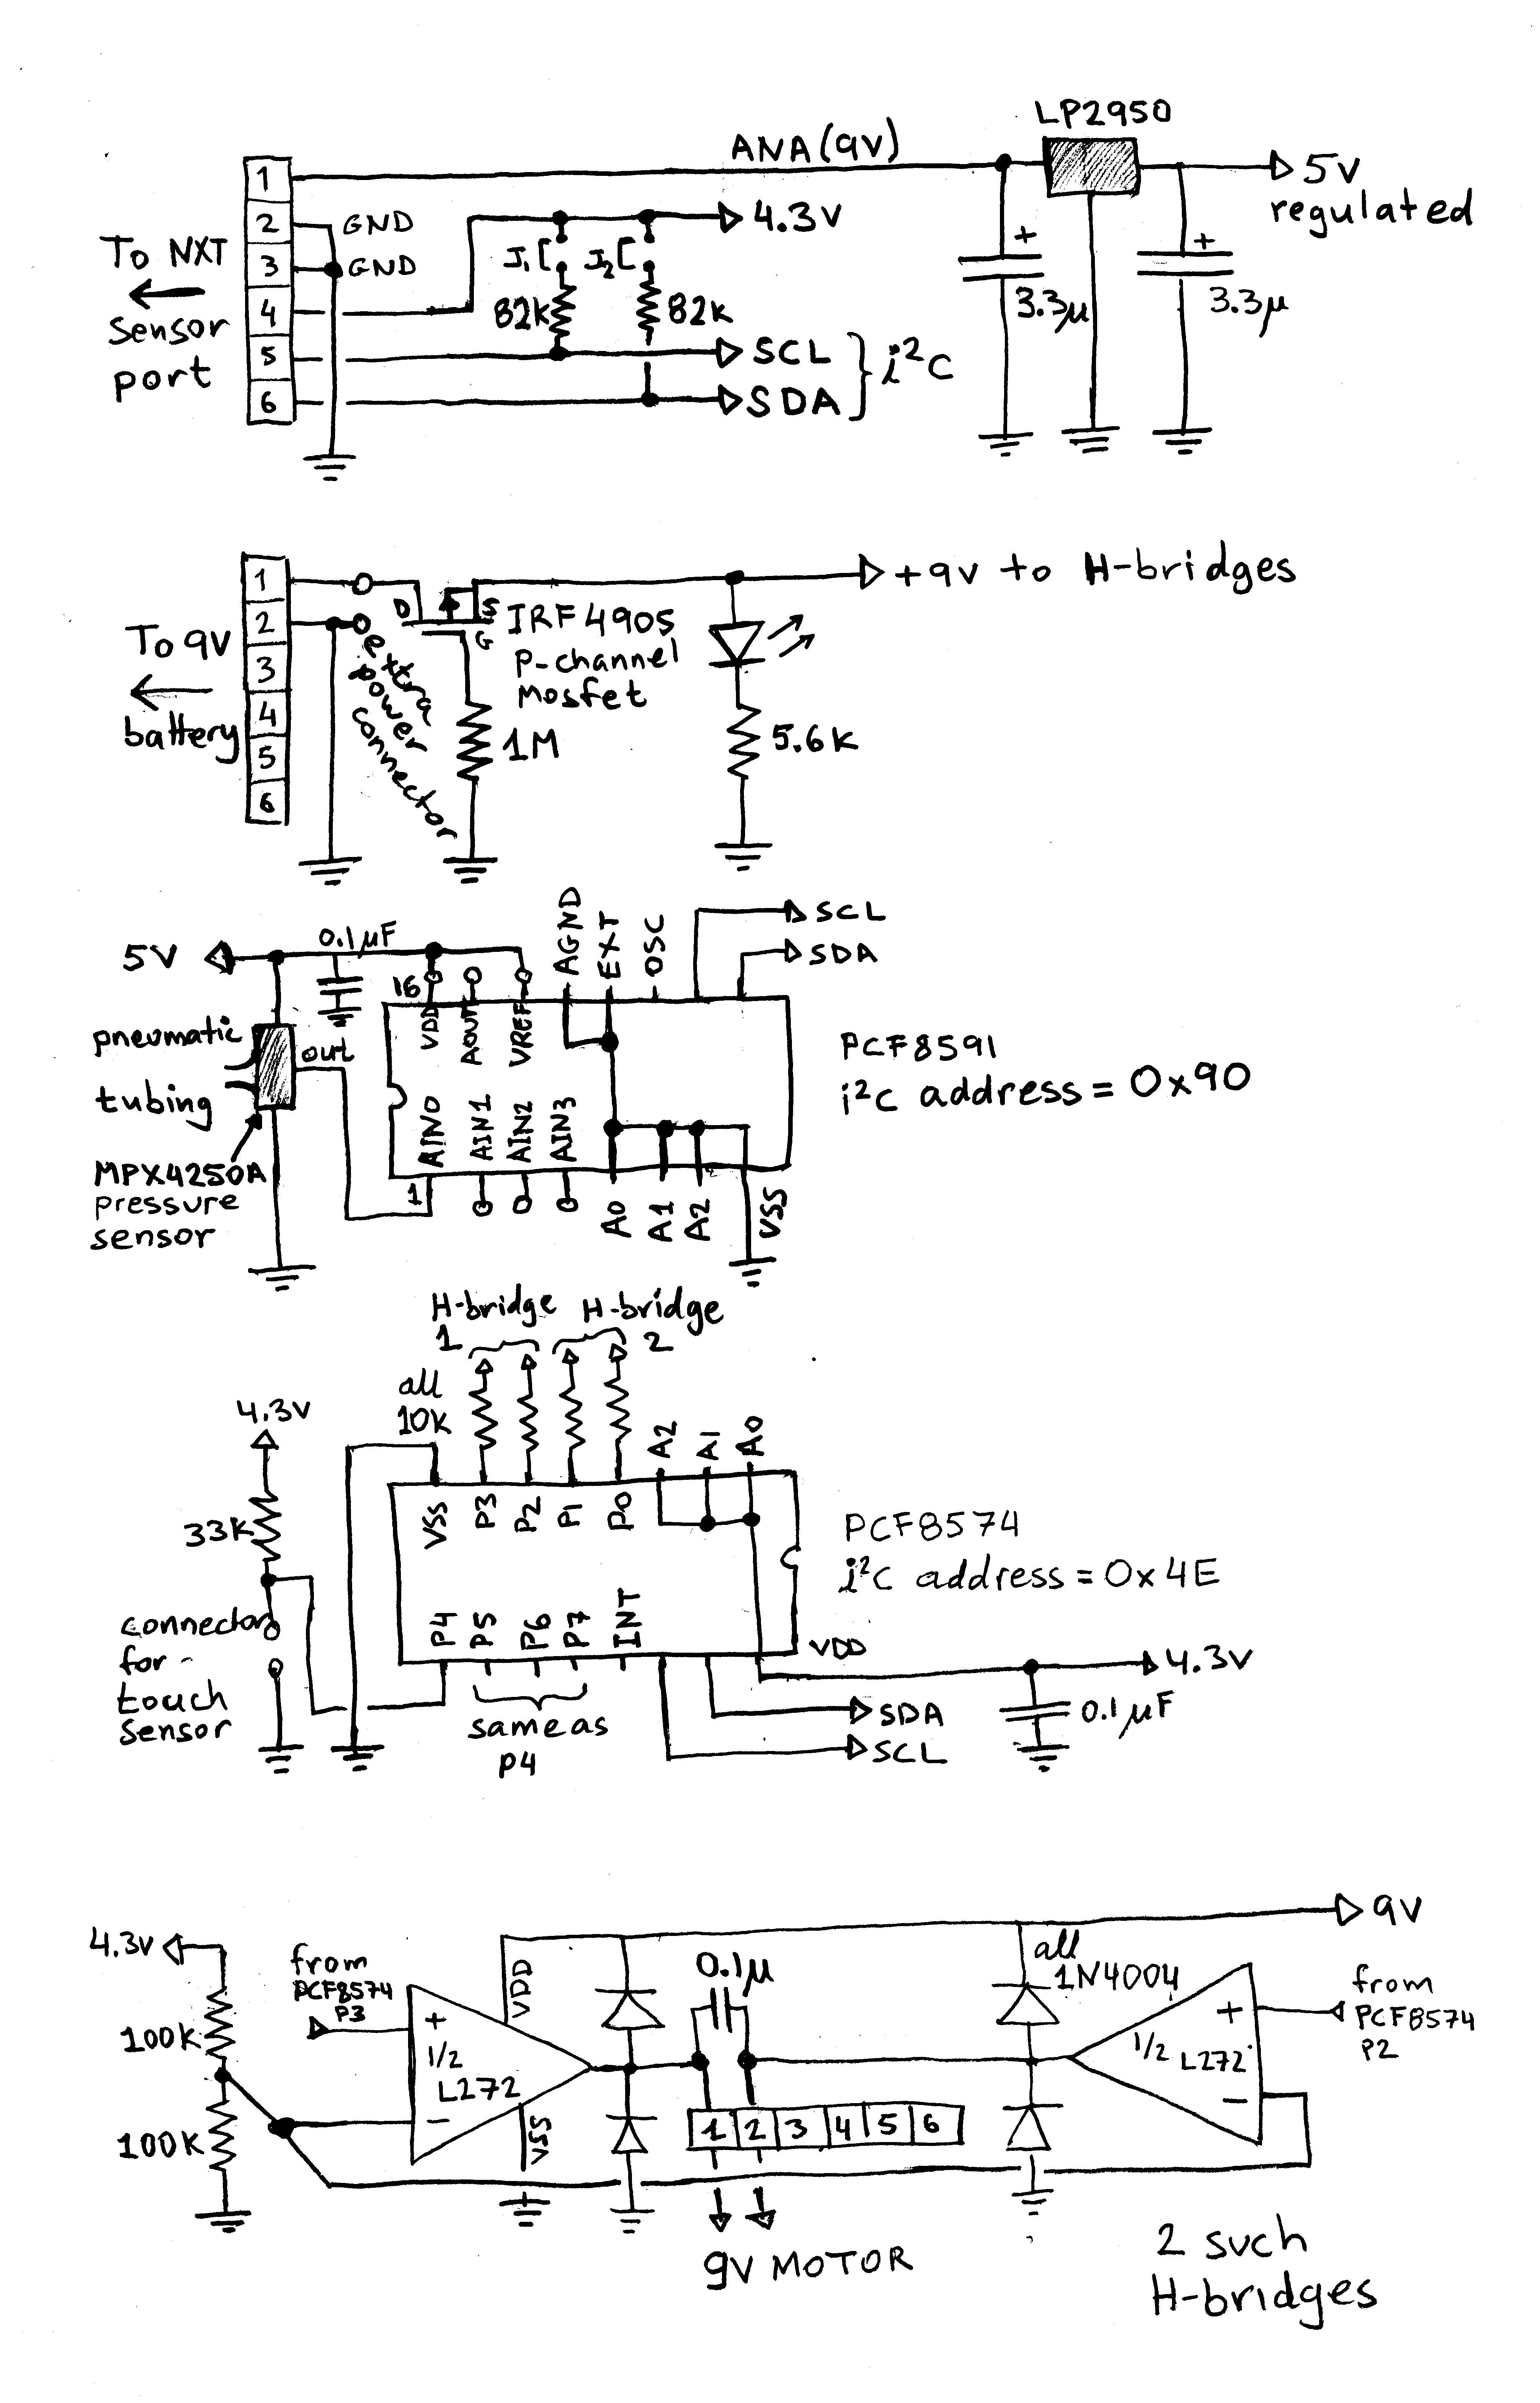 Schmatics of the motor controller and pressure sensor